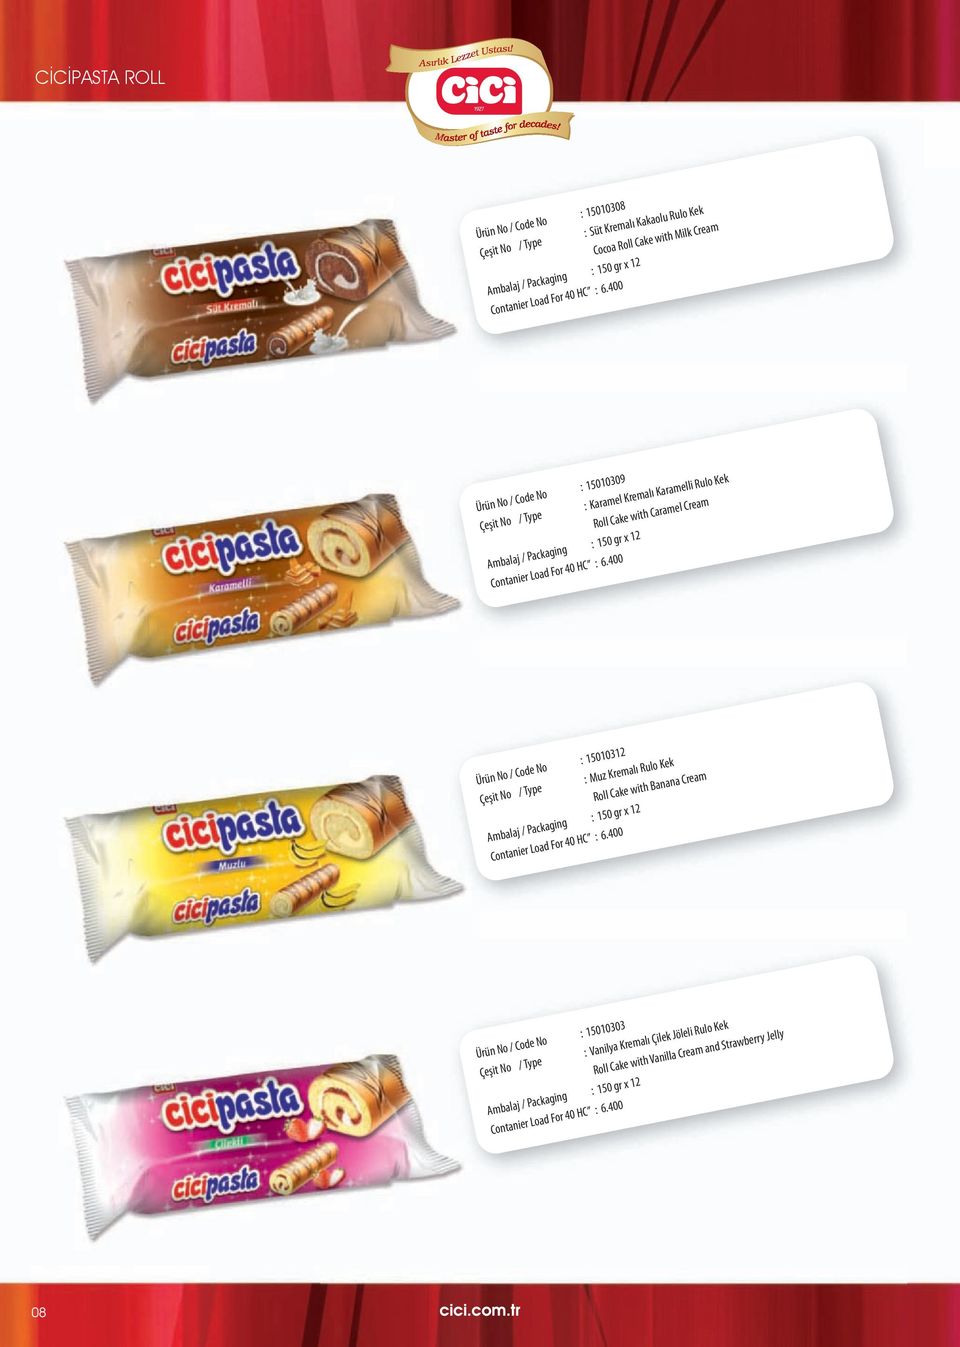 400 Ürün No / Code No : 15010312 Çeşit No / Type : Muz Kremalı Rulo Kek Roll Cake with Banana Cream Ambalaj / Packaging : 150 gr x 12 Contanier Load For 40 HC : 6.